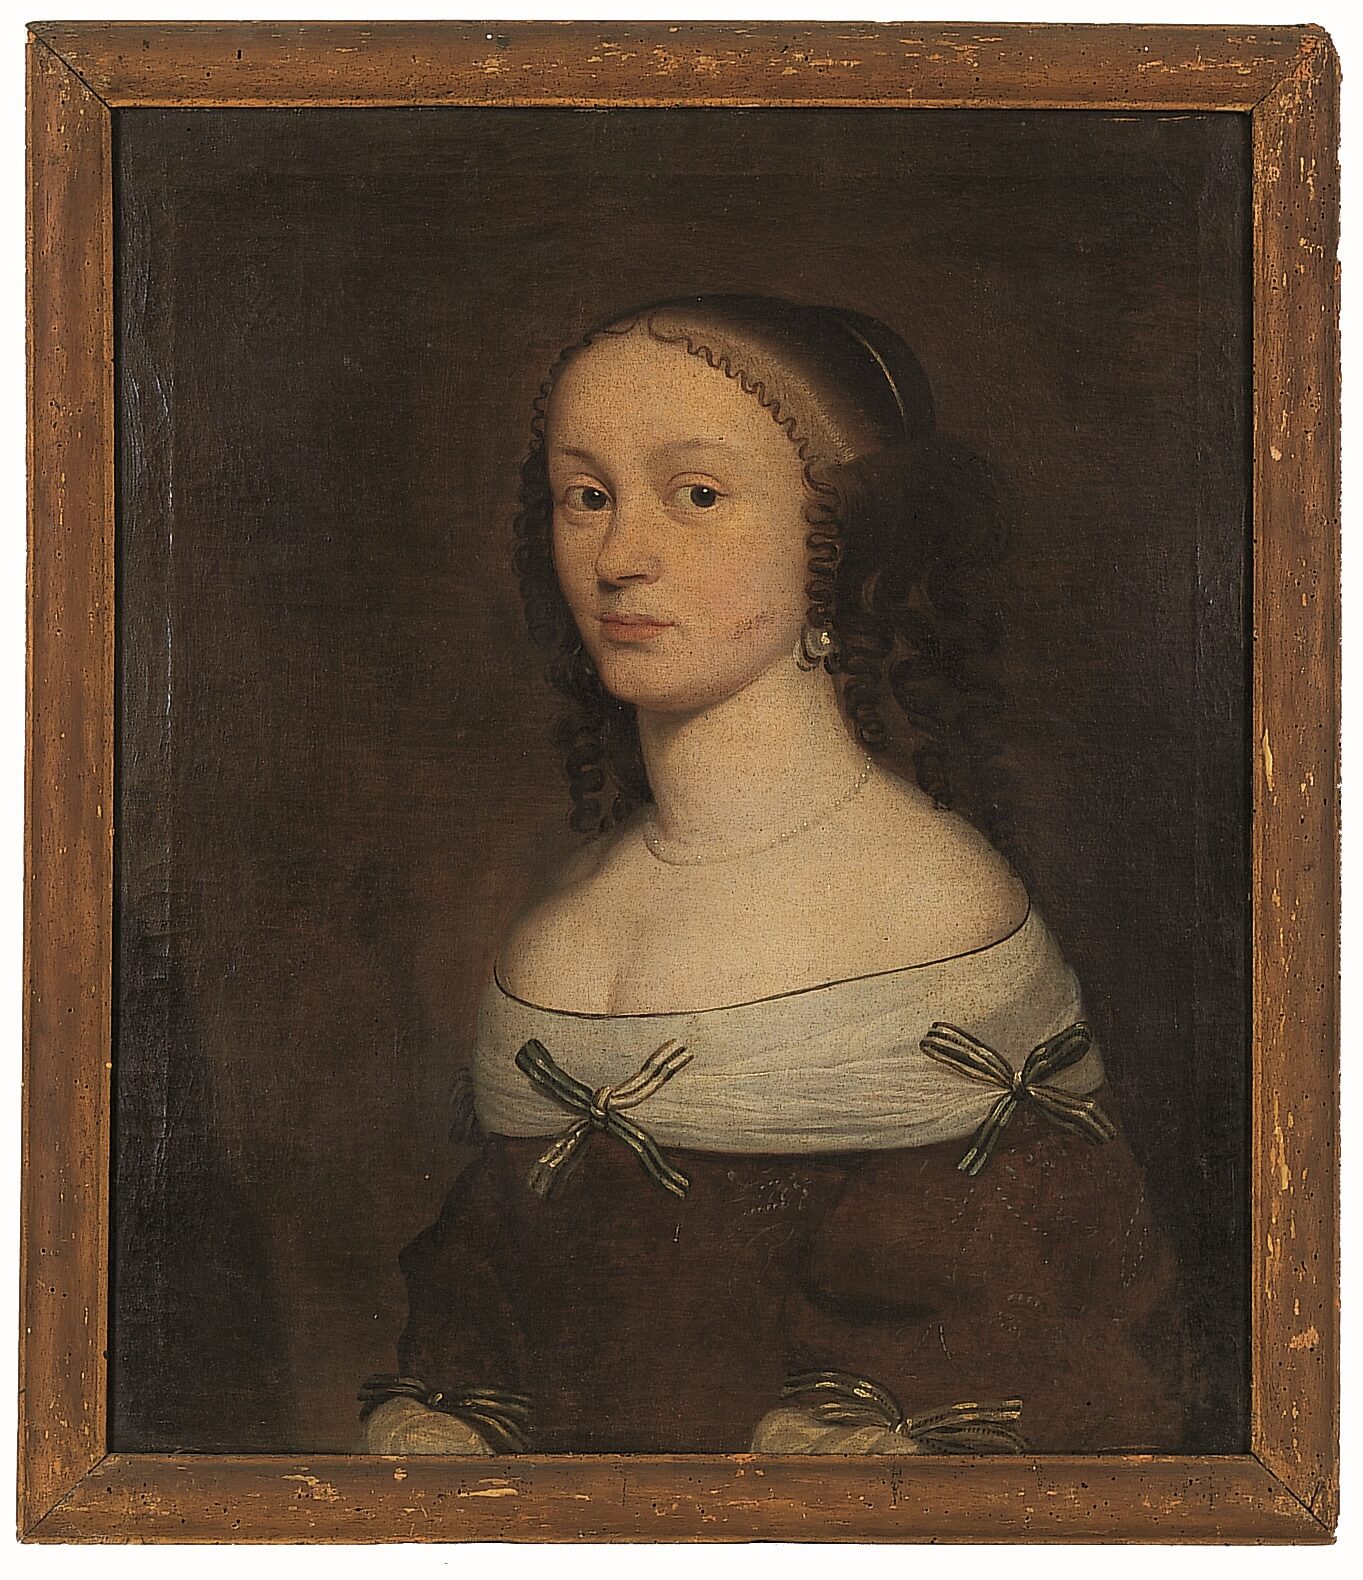 Anna v.Wietersheim (1660 - 1684, Ehefrau v. Pfilipp Carl, Öl LW, um 1680, Ra. 72 x 62, ebg0381